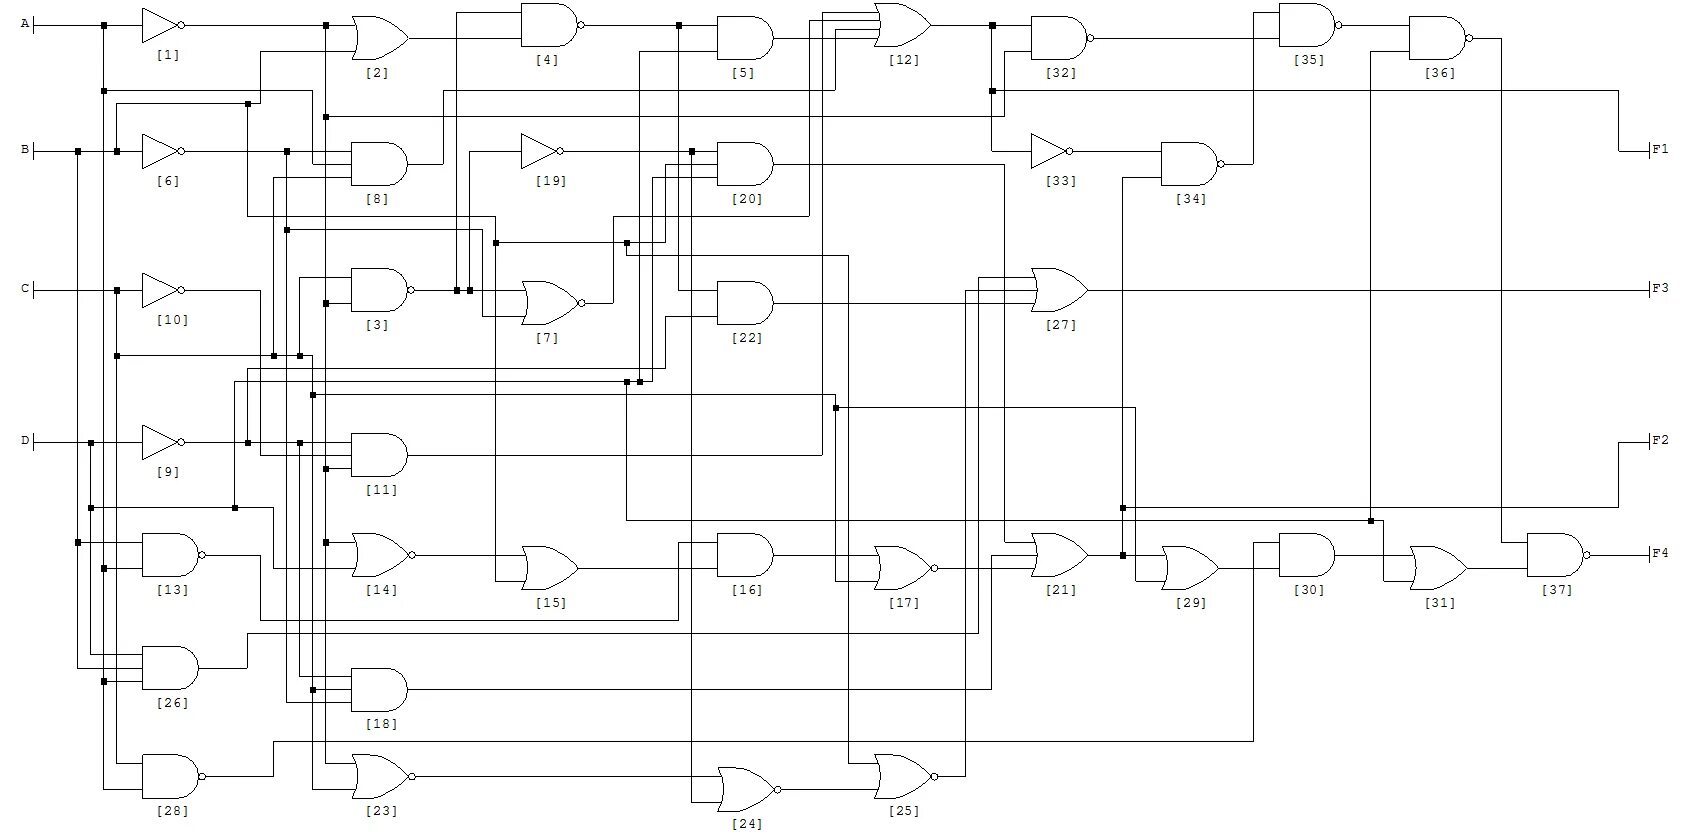 Схема mr. Плис схема. Boolean Logic circuit. Схема Mr PLD. Boolean expression (CD+AC)C+A ̅D A) draw a circuit diagram.